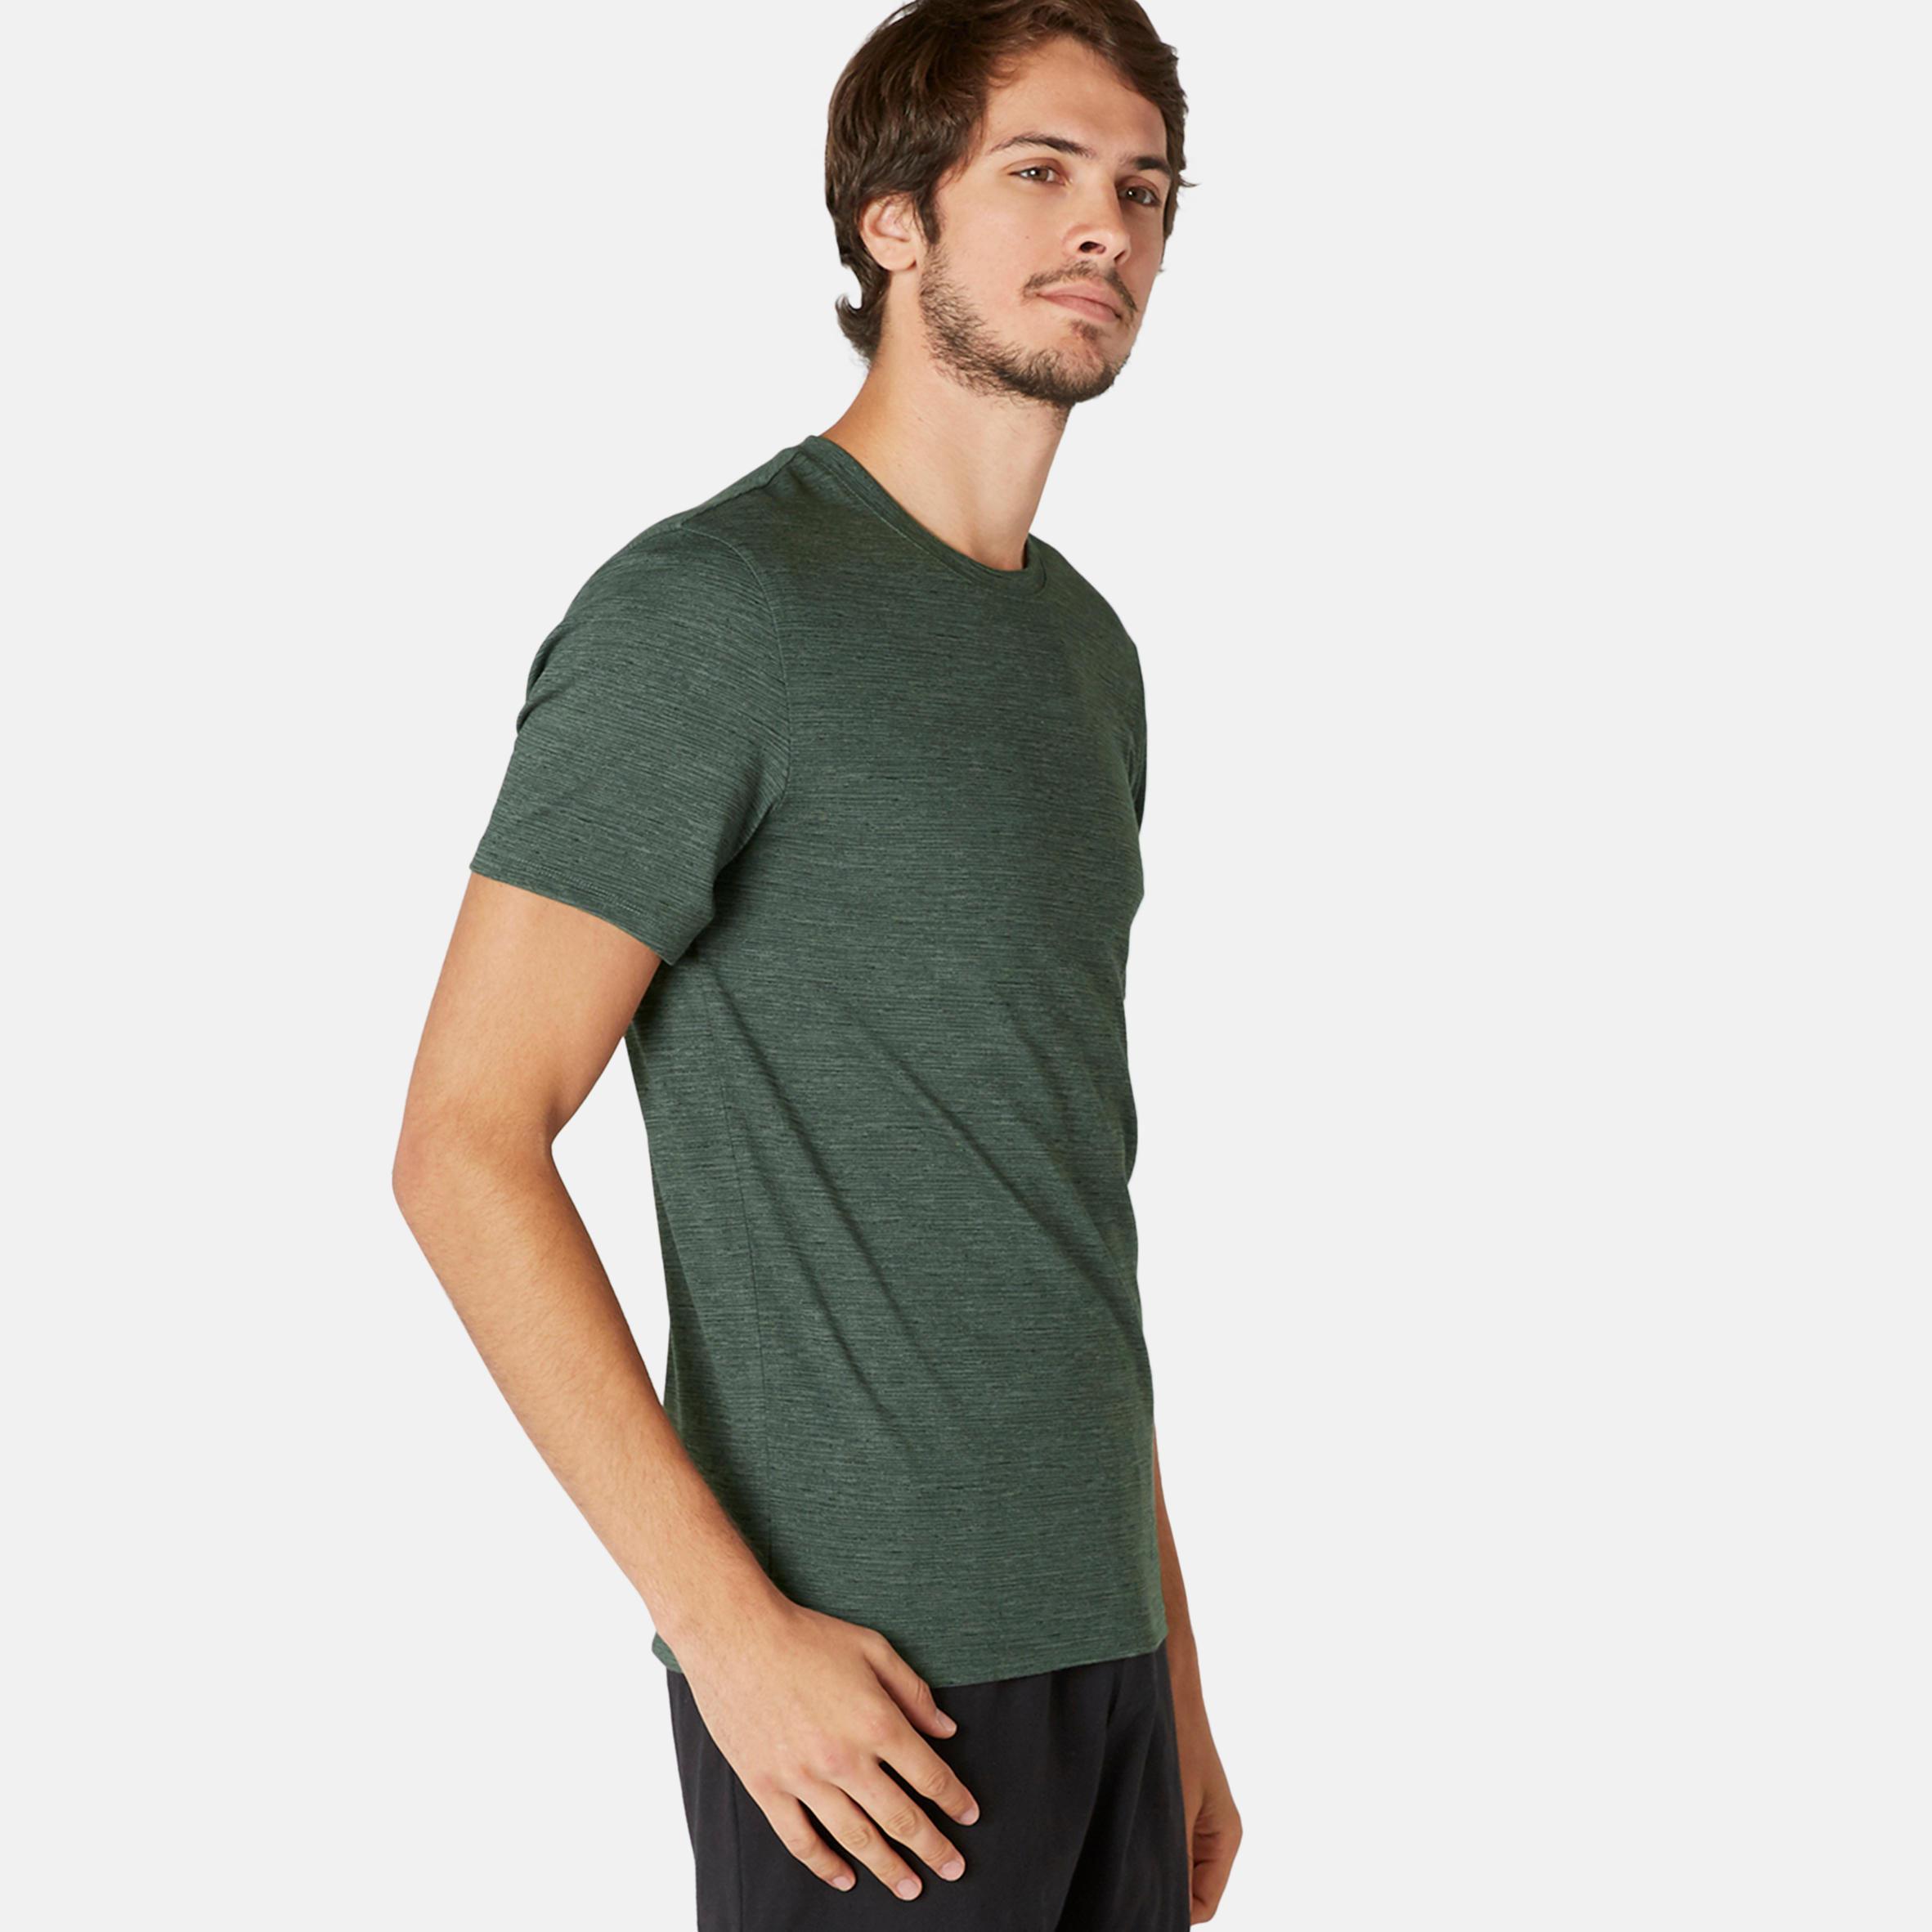 DOMYOS Men's Slim-Fit T-Shirt 500 - Khaki Pattern